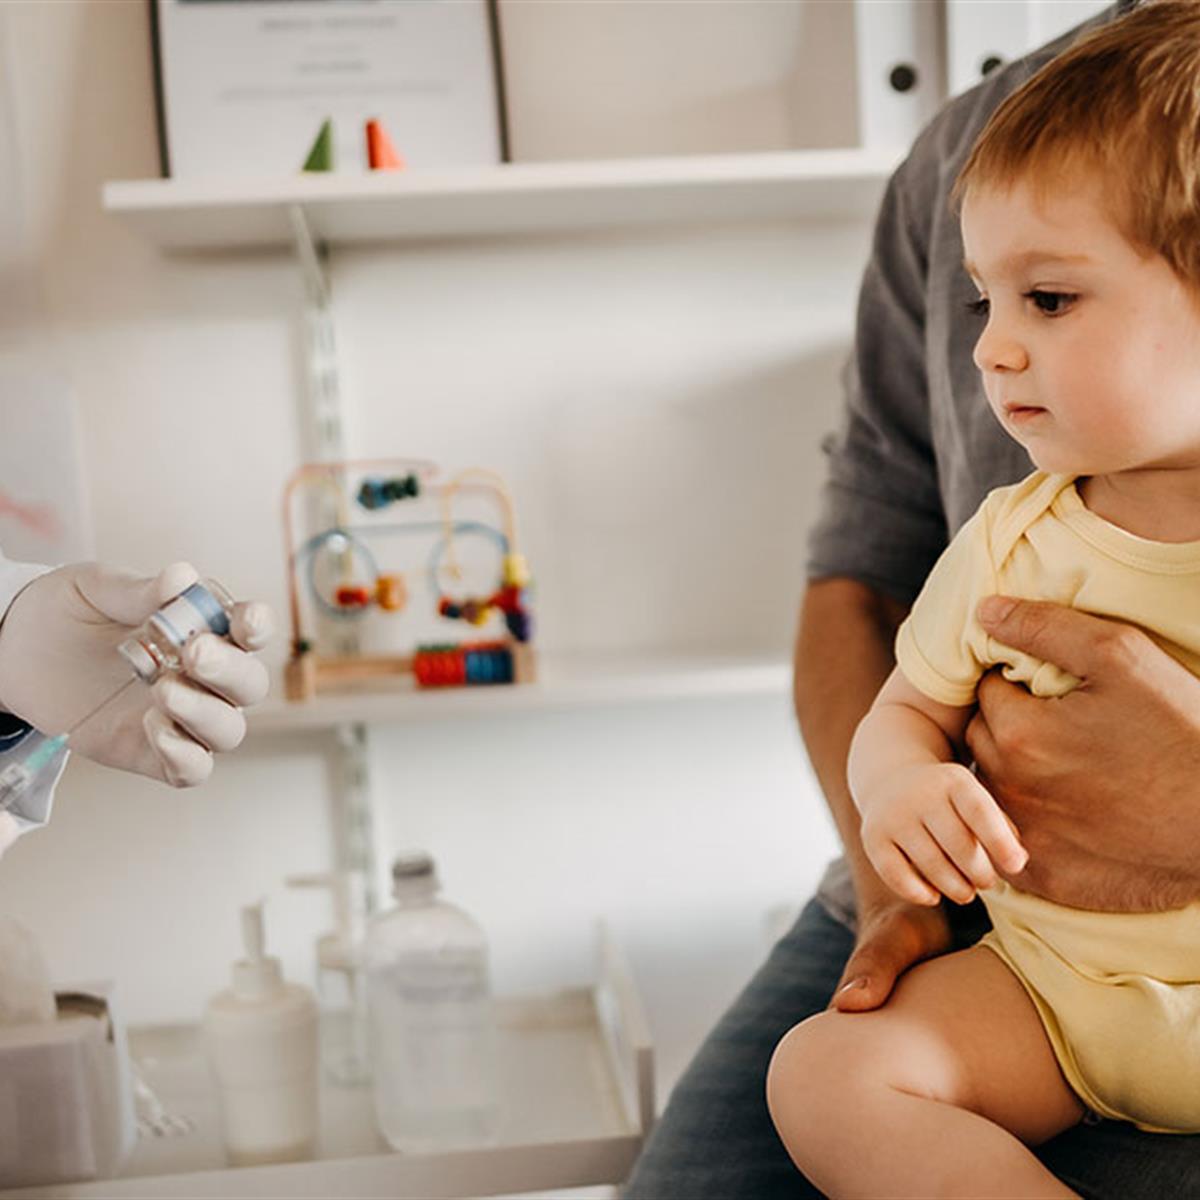 Factsheet: How to Make Vaccination Sensory-Friendly